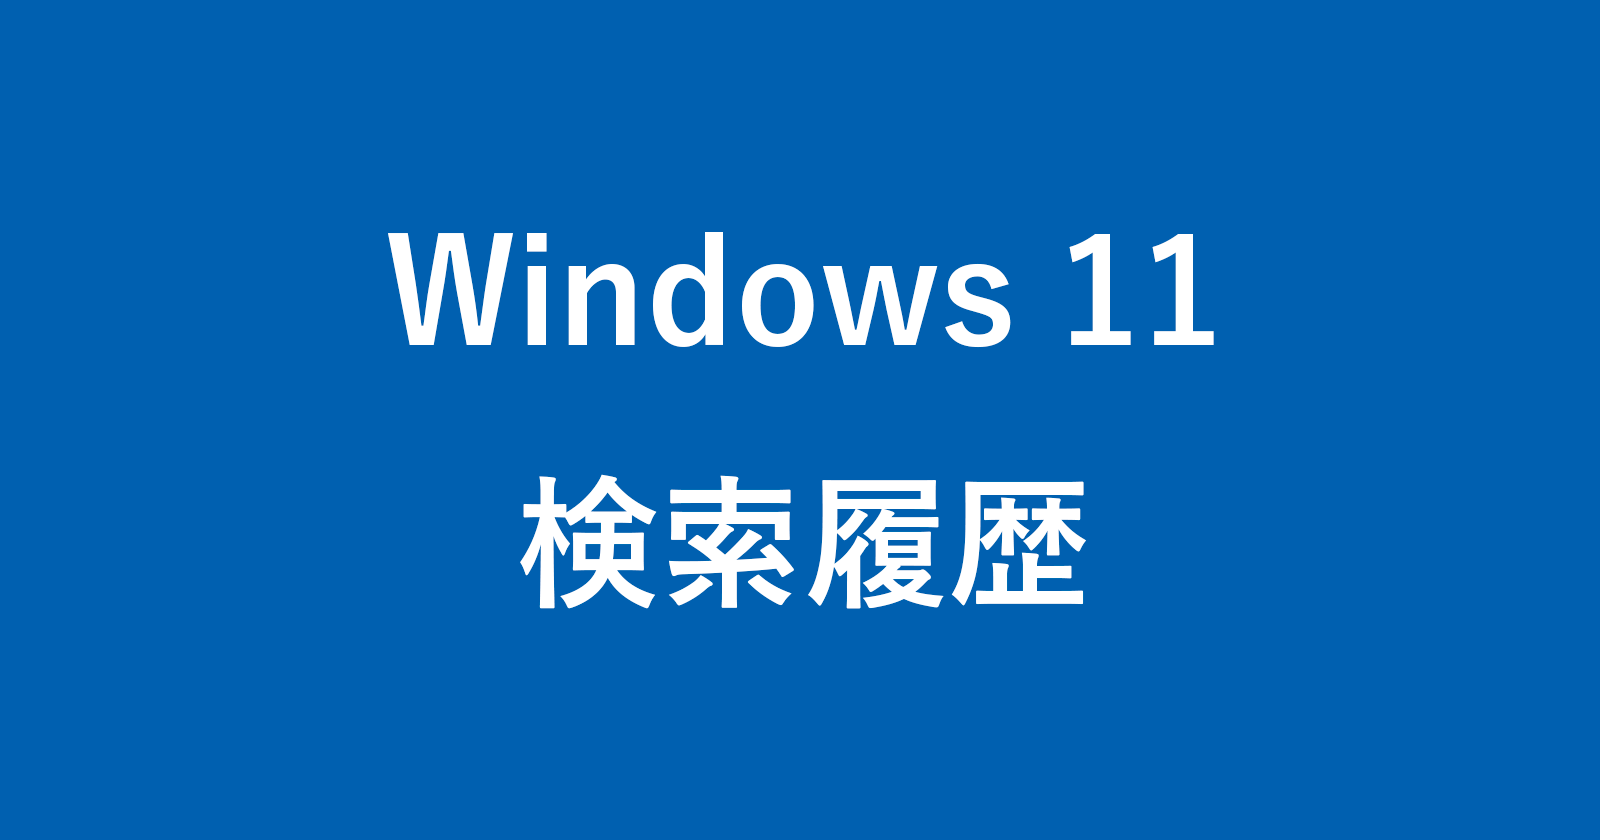 windows 11 search history